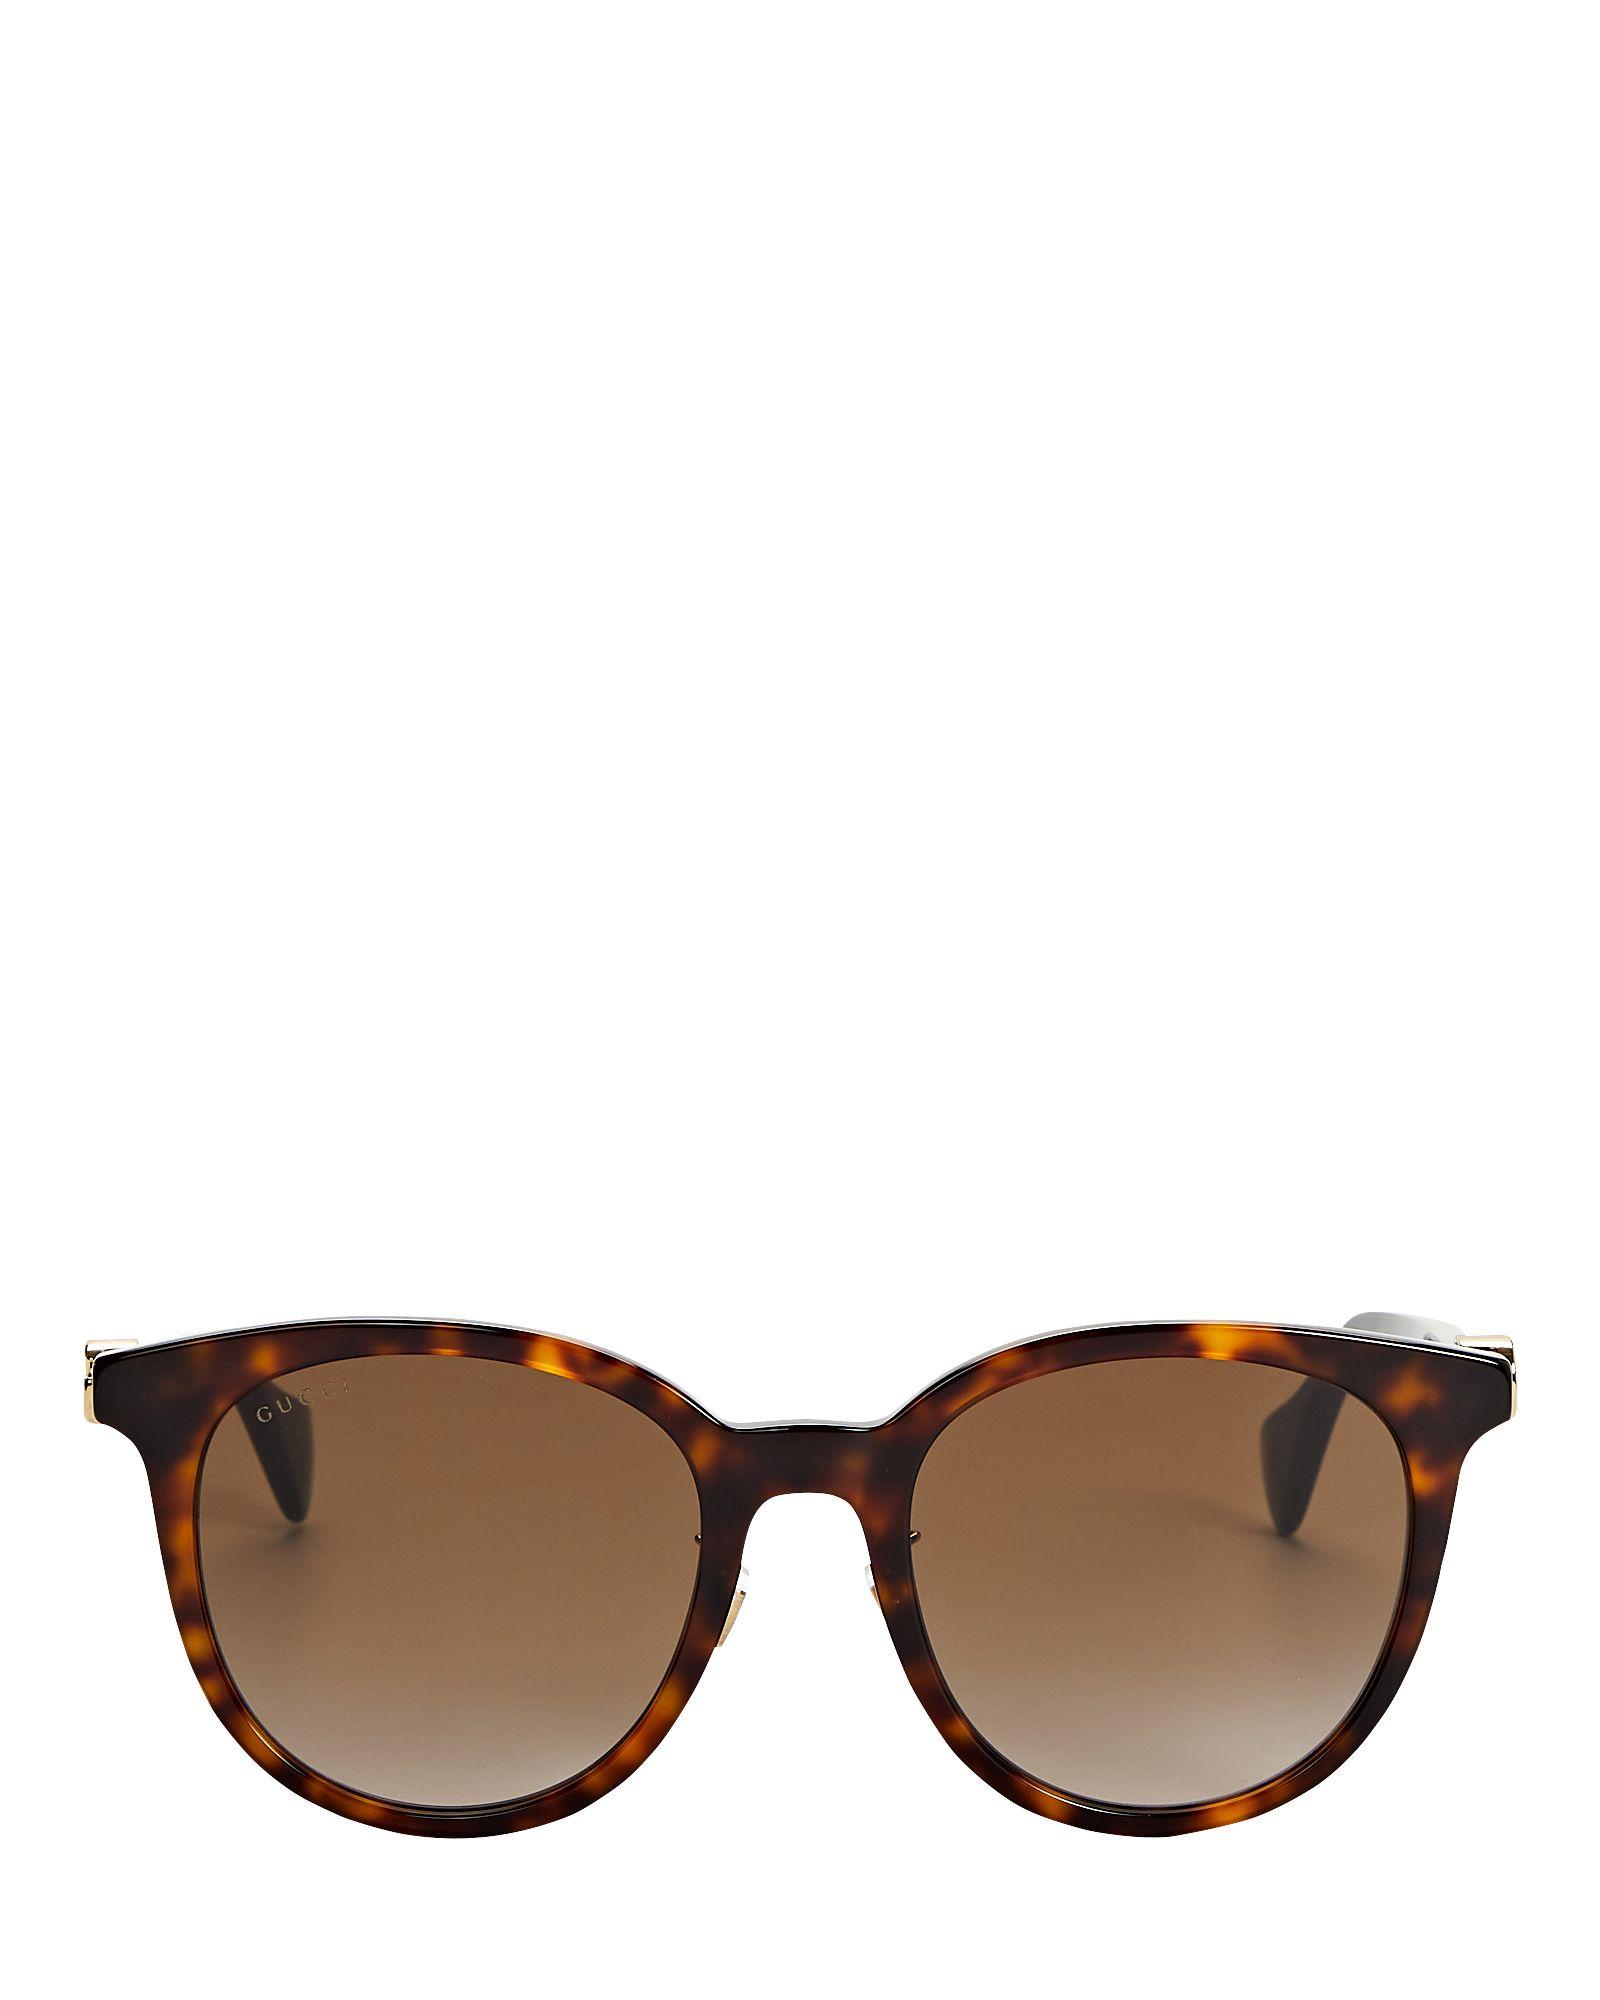 Gucci Oversized Round Tortoiseshell Sunglasses in Brown | Lyst